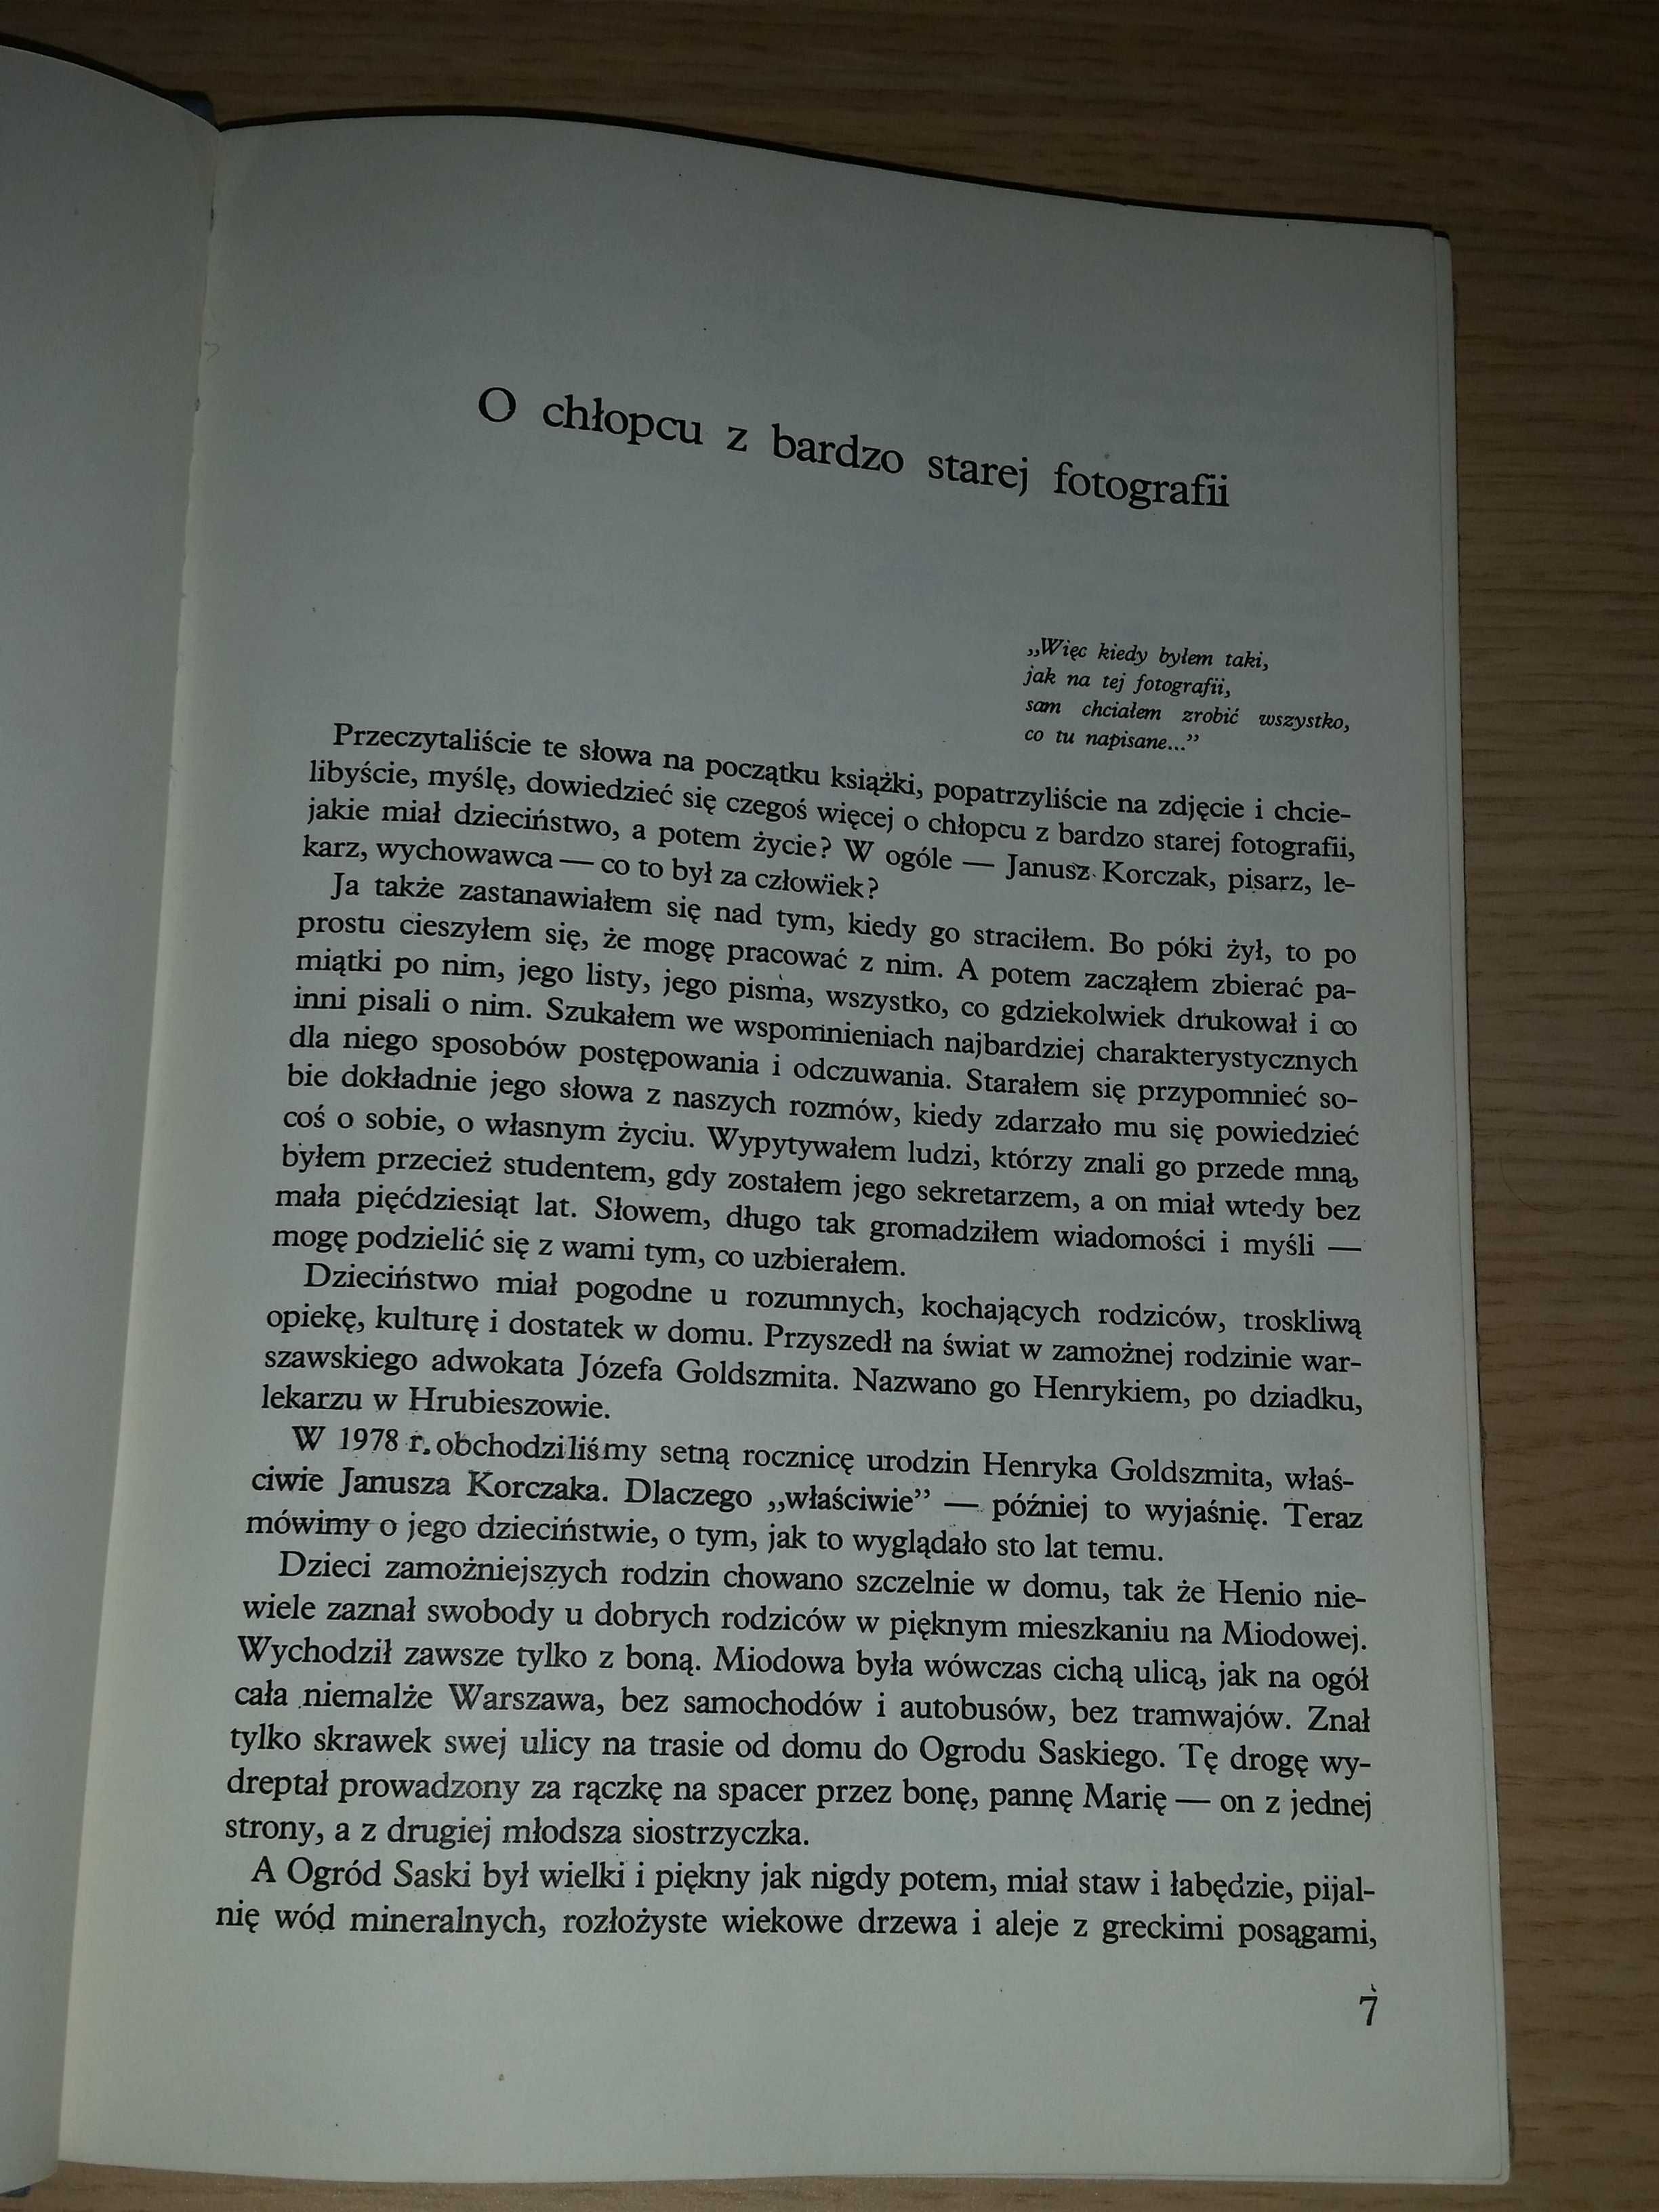 Król Maciuś Pierwszy Janusz Korczak Nasza Księgarnia lektura 1983